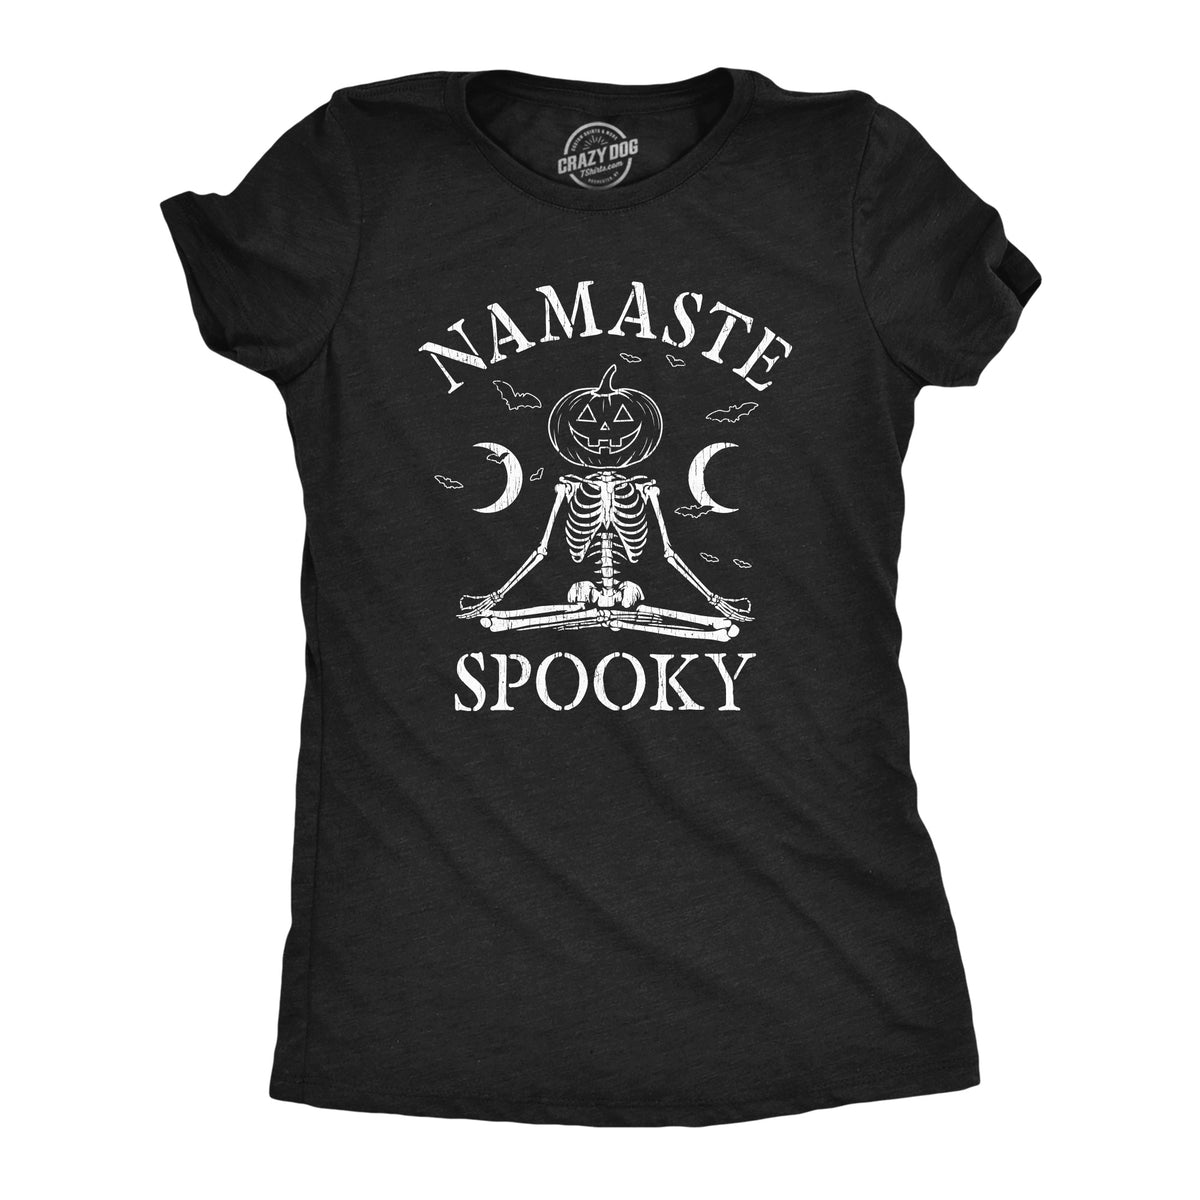 Funny Heather Black - NAMASTE Namaste Spooky Womens T Shirt Nerdy Halloween sarcastic Tee